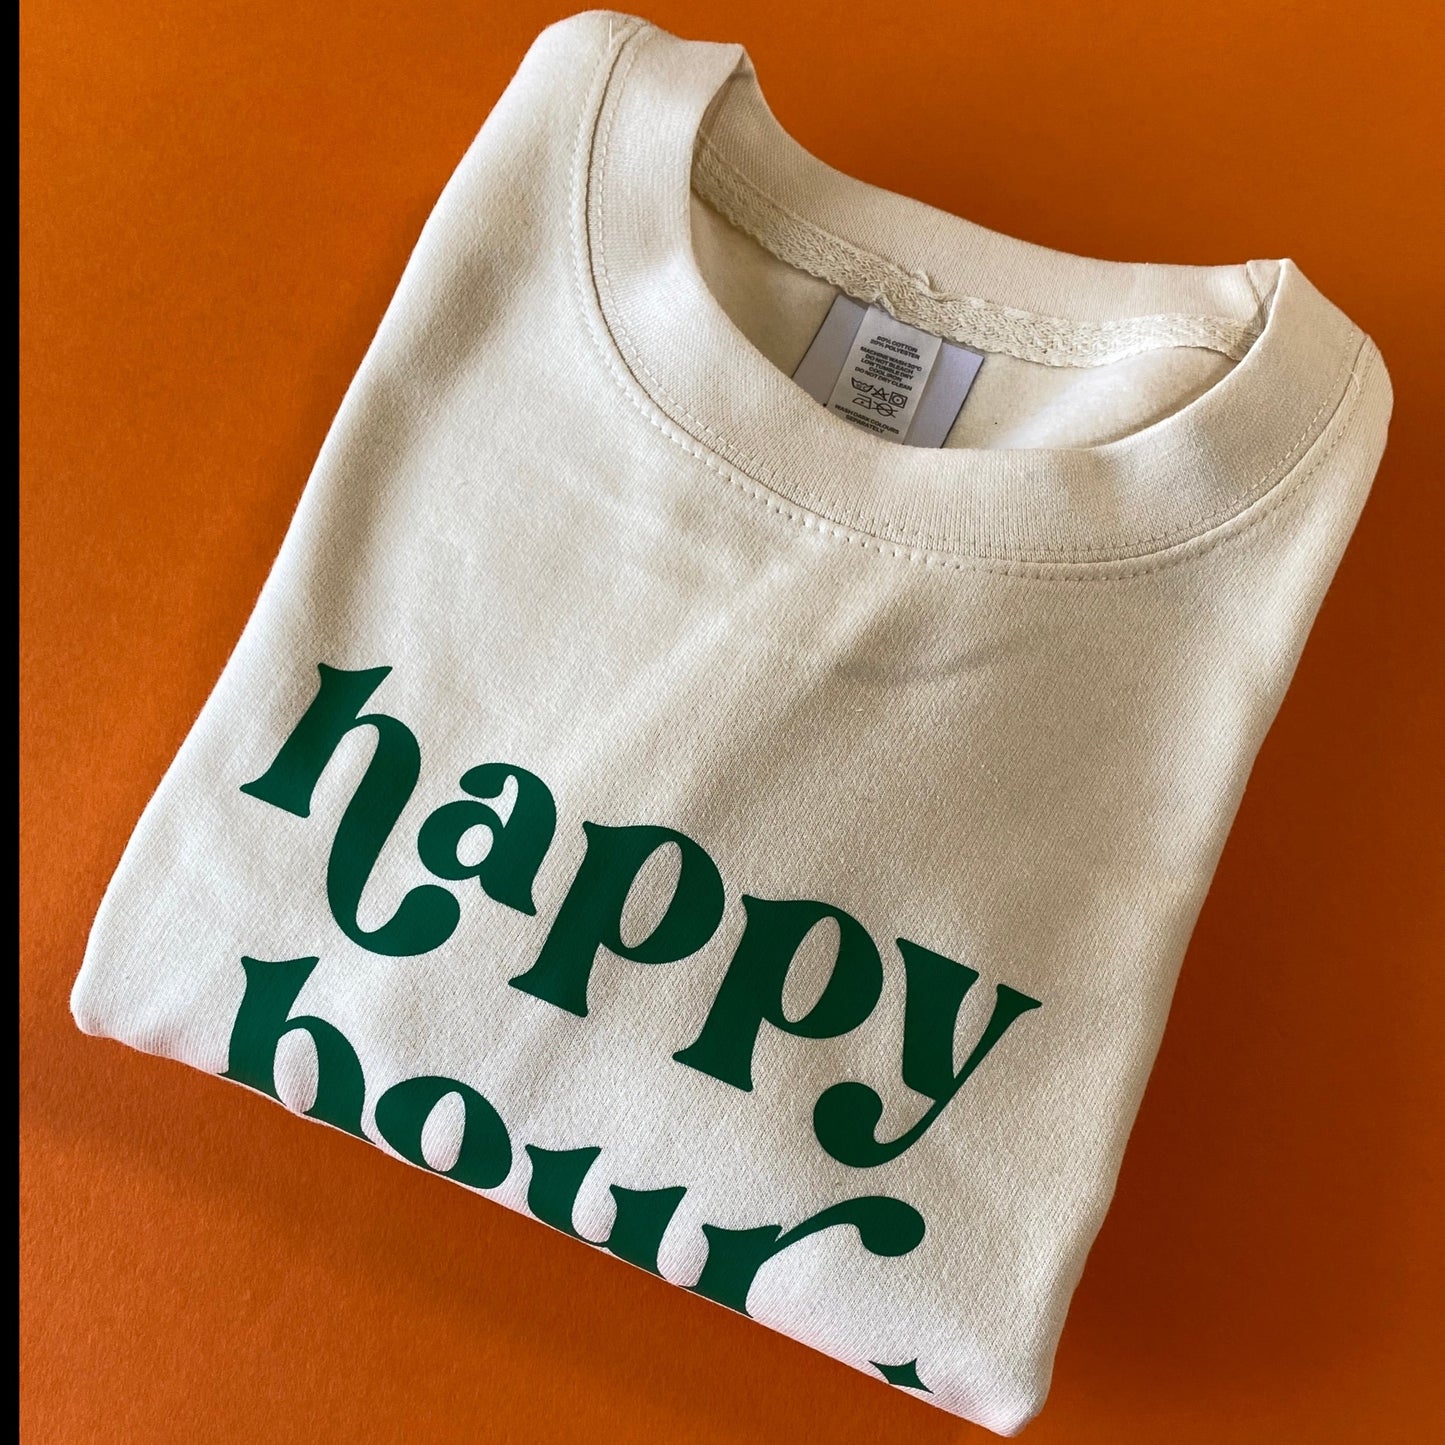 Happy Hour Slogan Sweatshirt